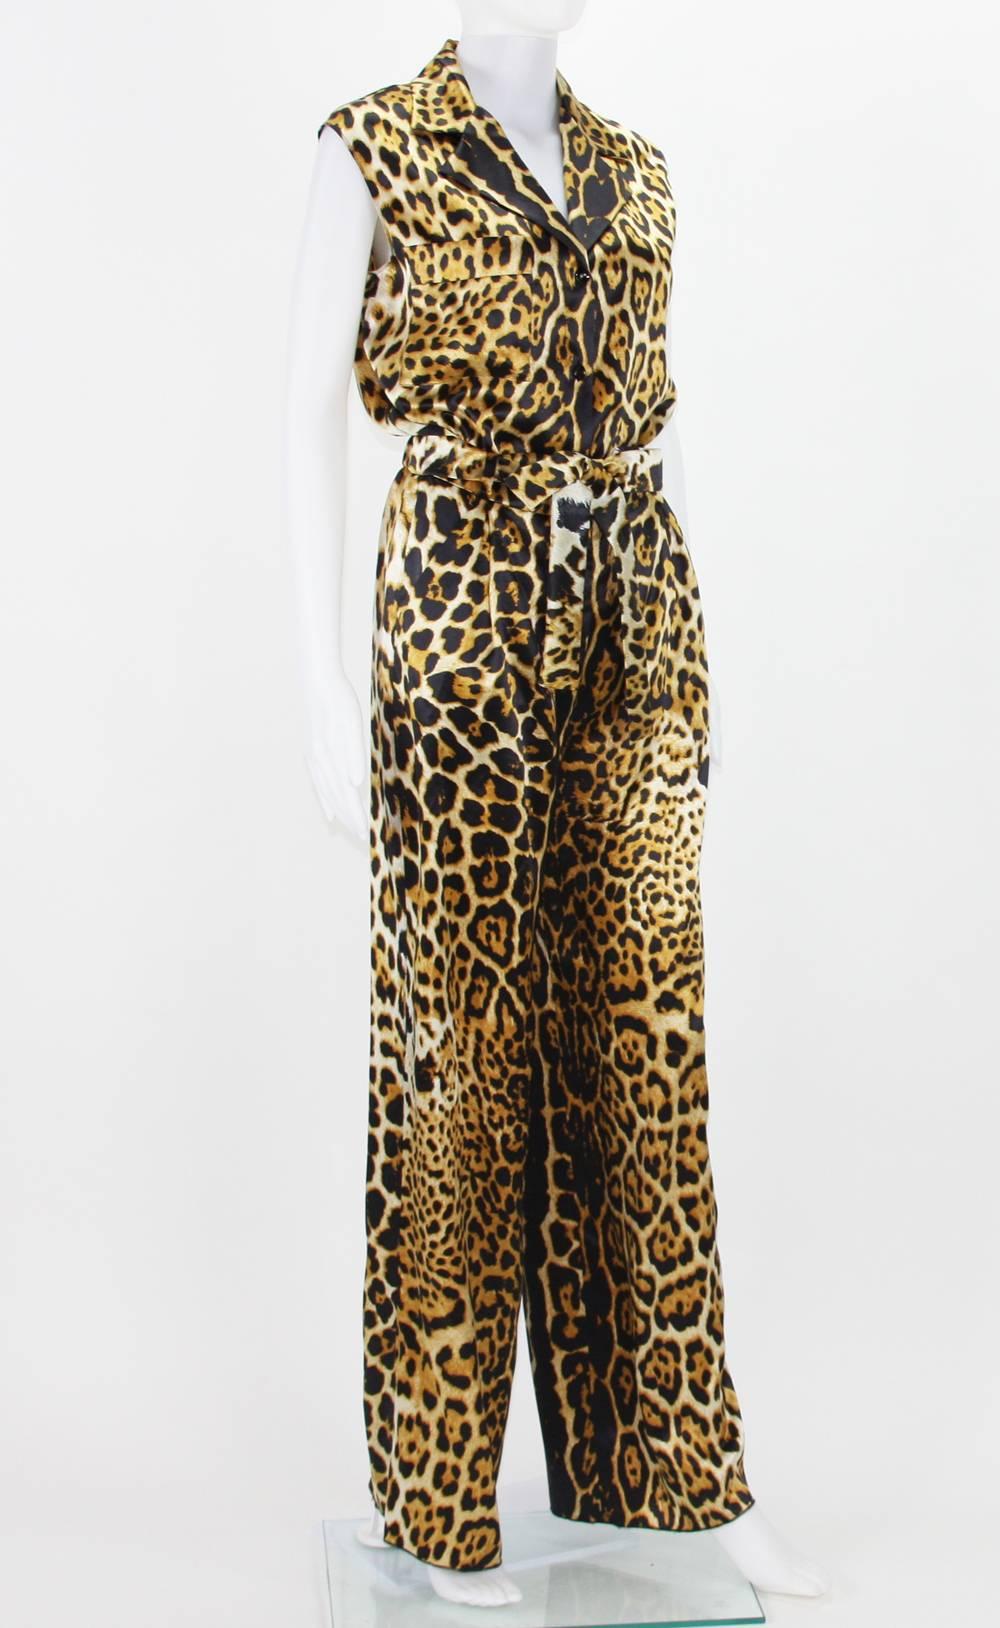 Yves Saint Laurent Silk Leopard Print Jumpsuit
Fr. size 36 - US 4
100% Silk
Buttons Closure Top, Zip Closure Pants
Attached Belt, Two Side Deep Pockets, Unhemmed
Measurements: Length - 62 inches, Bust - 36/37, Waist - 27/28 + stretch.
New without